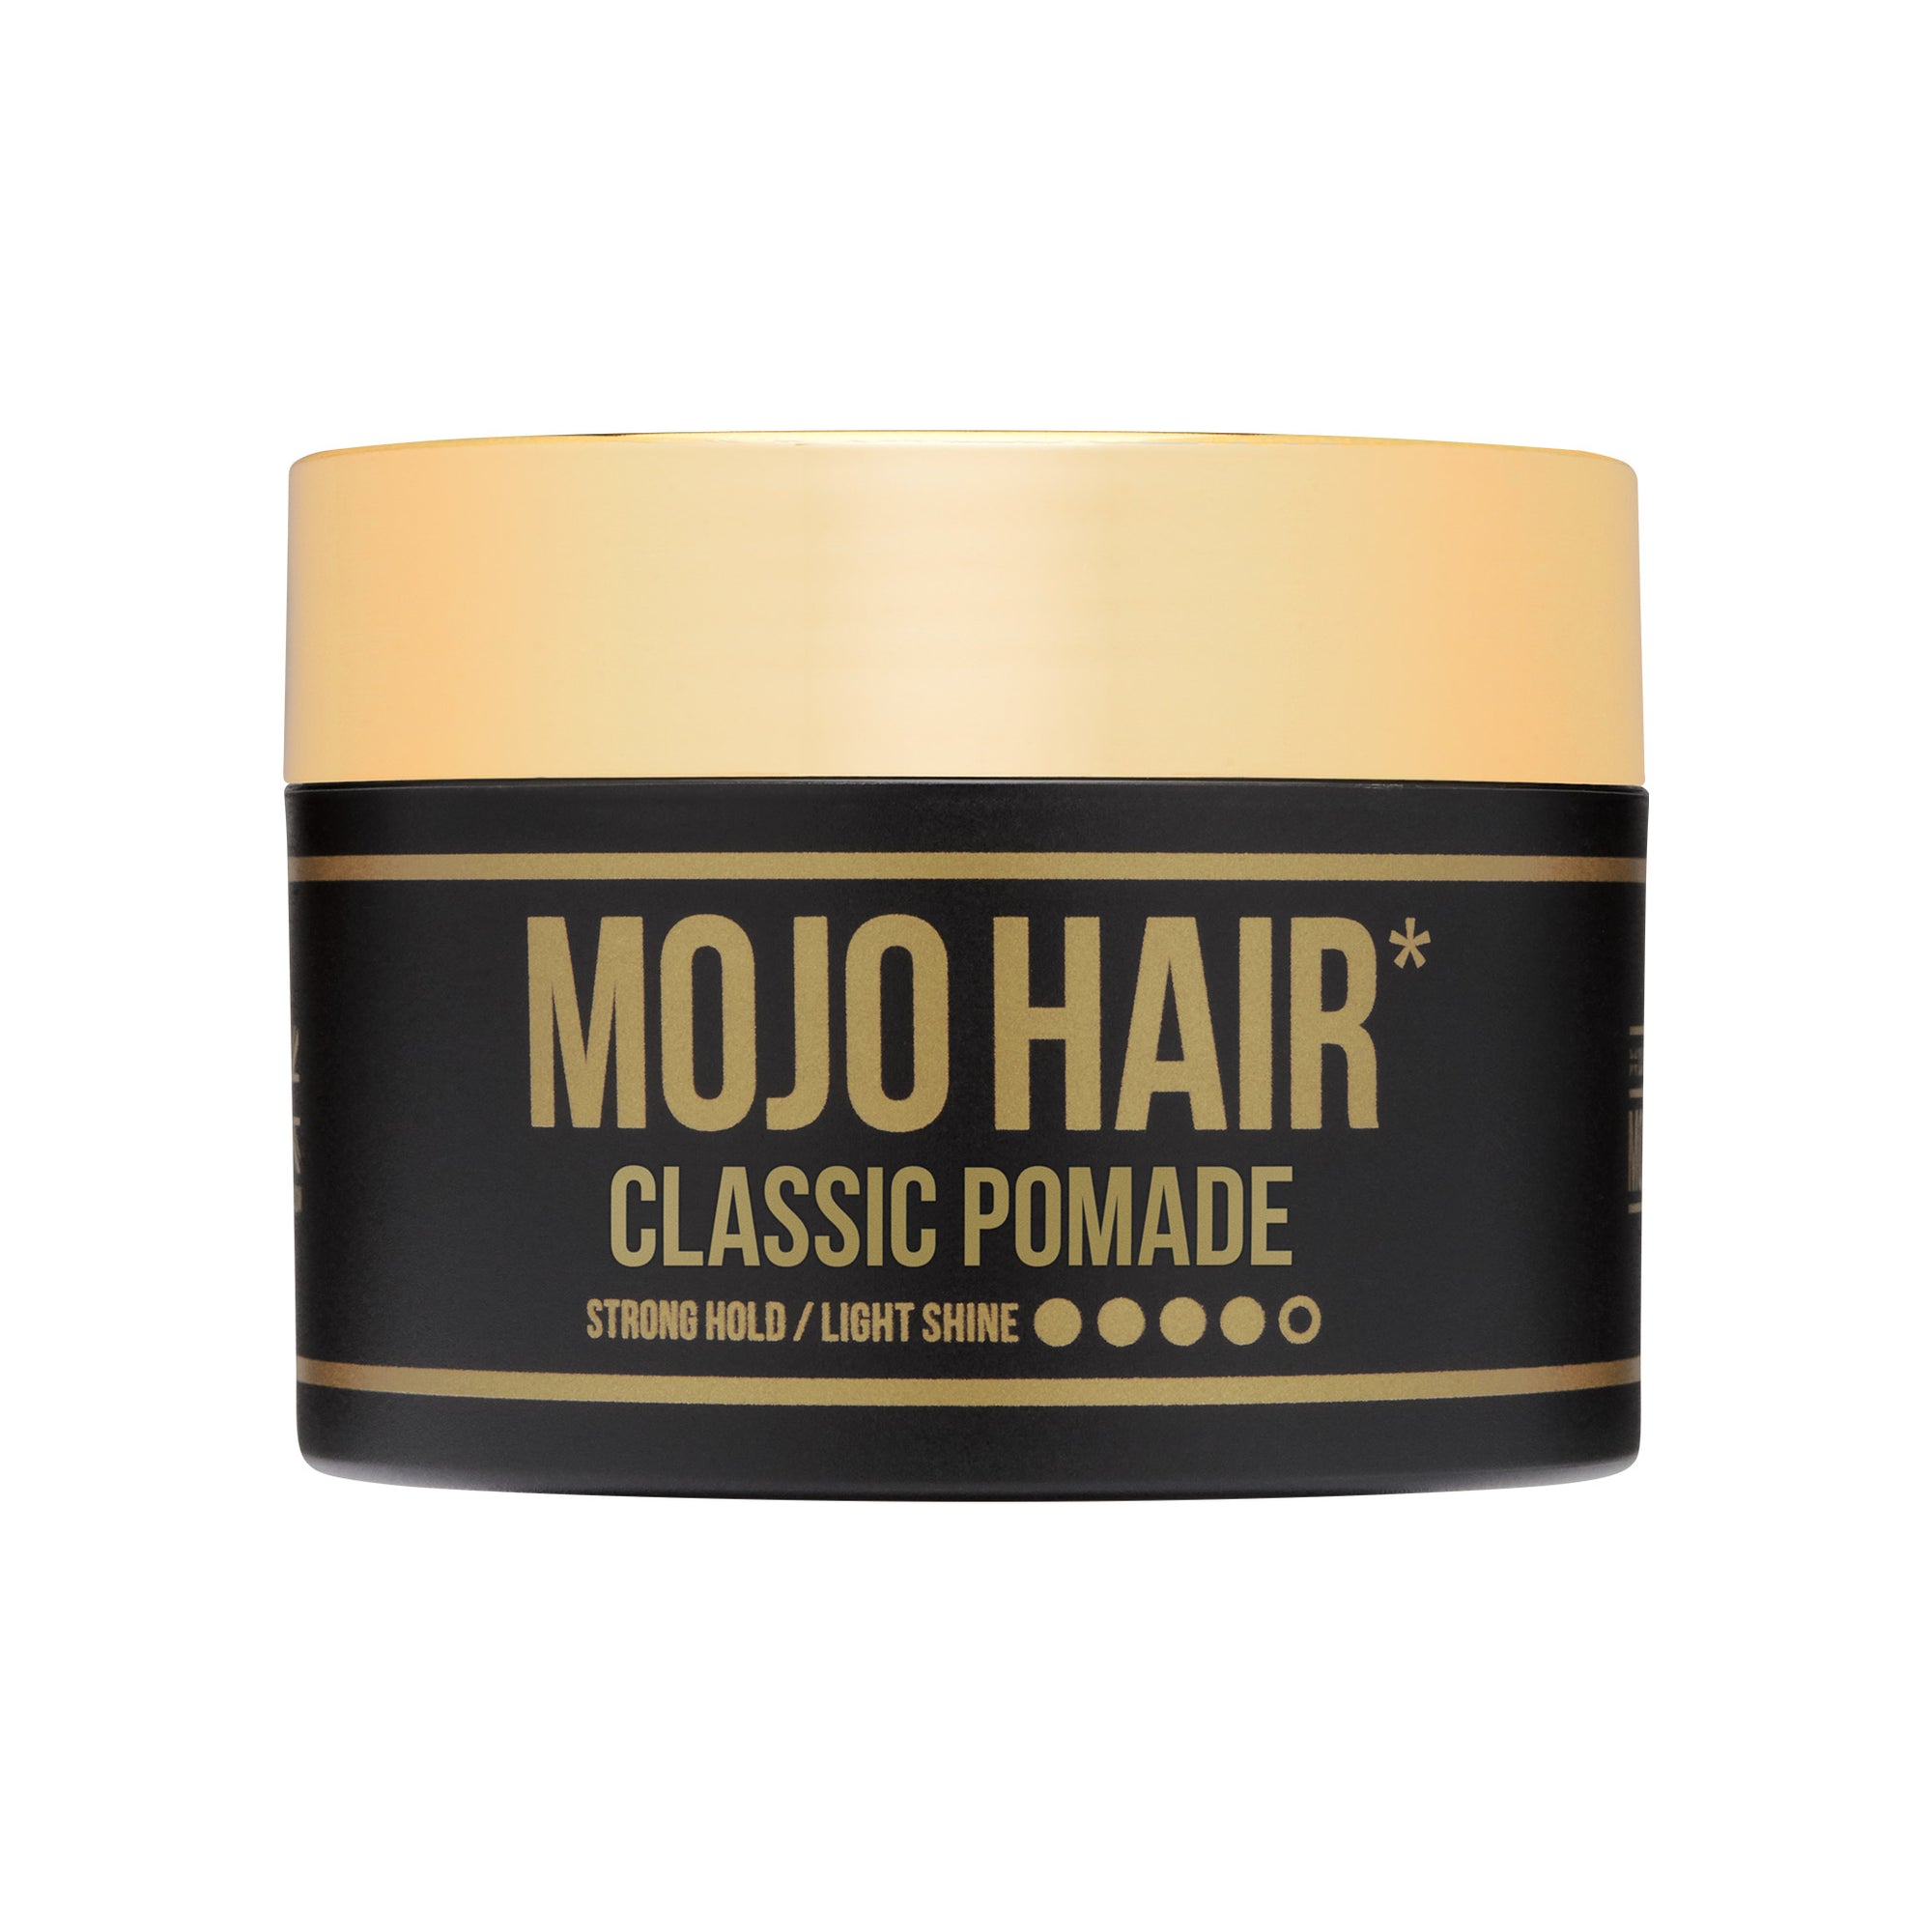 Mojo Hair Classic Pomade (75ml / 75g / 2.53fl.oz)